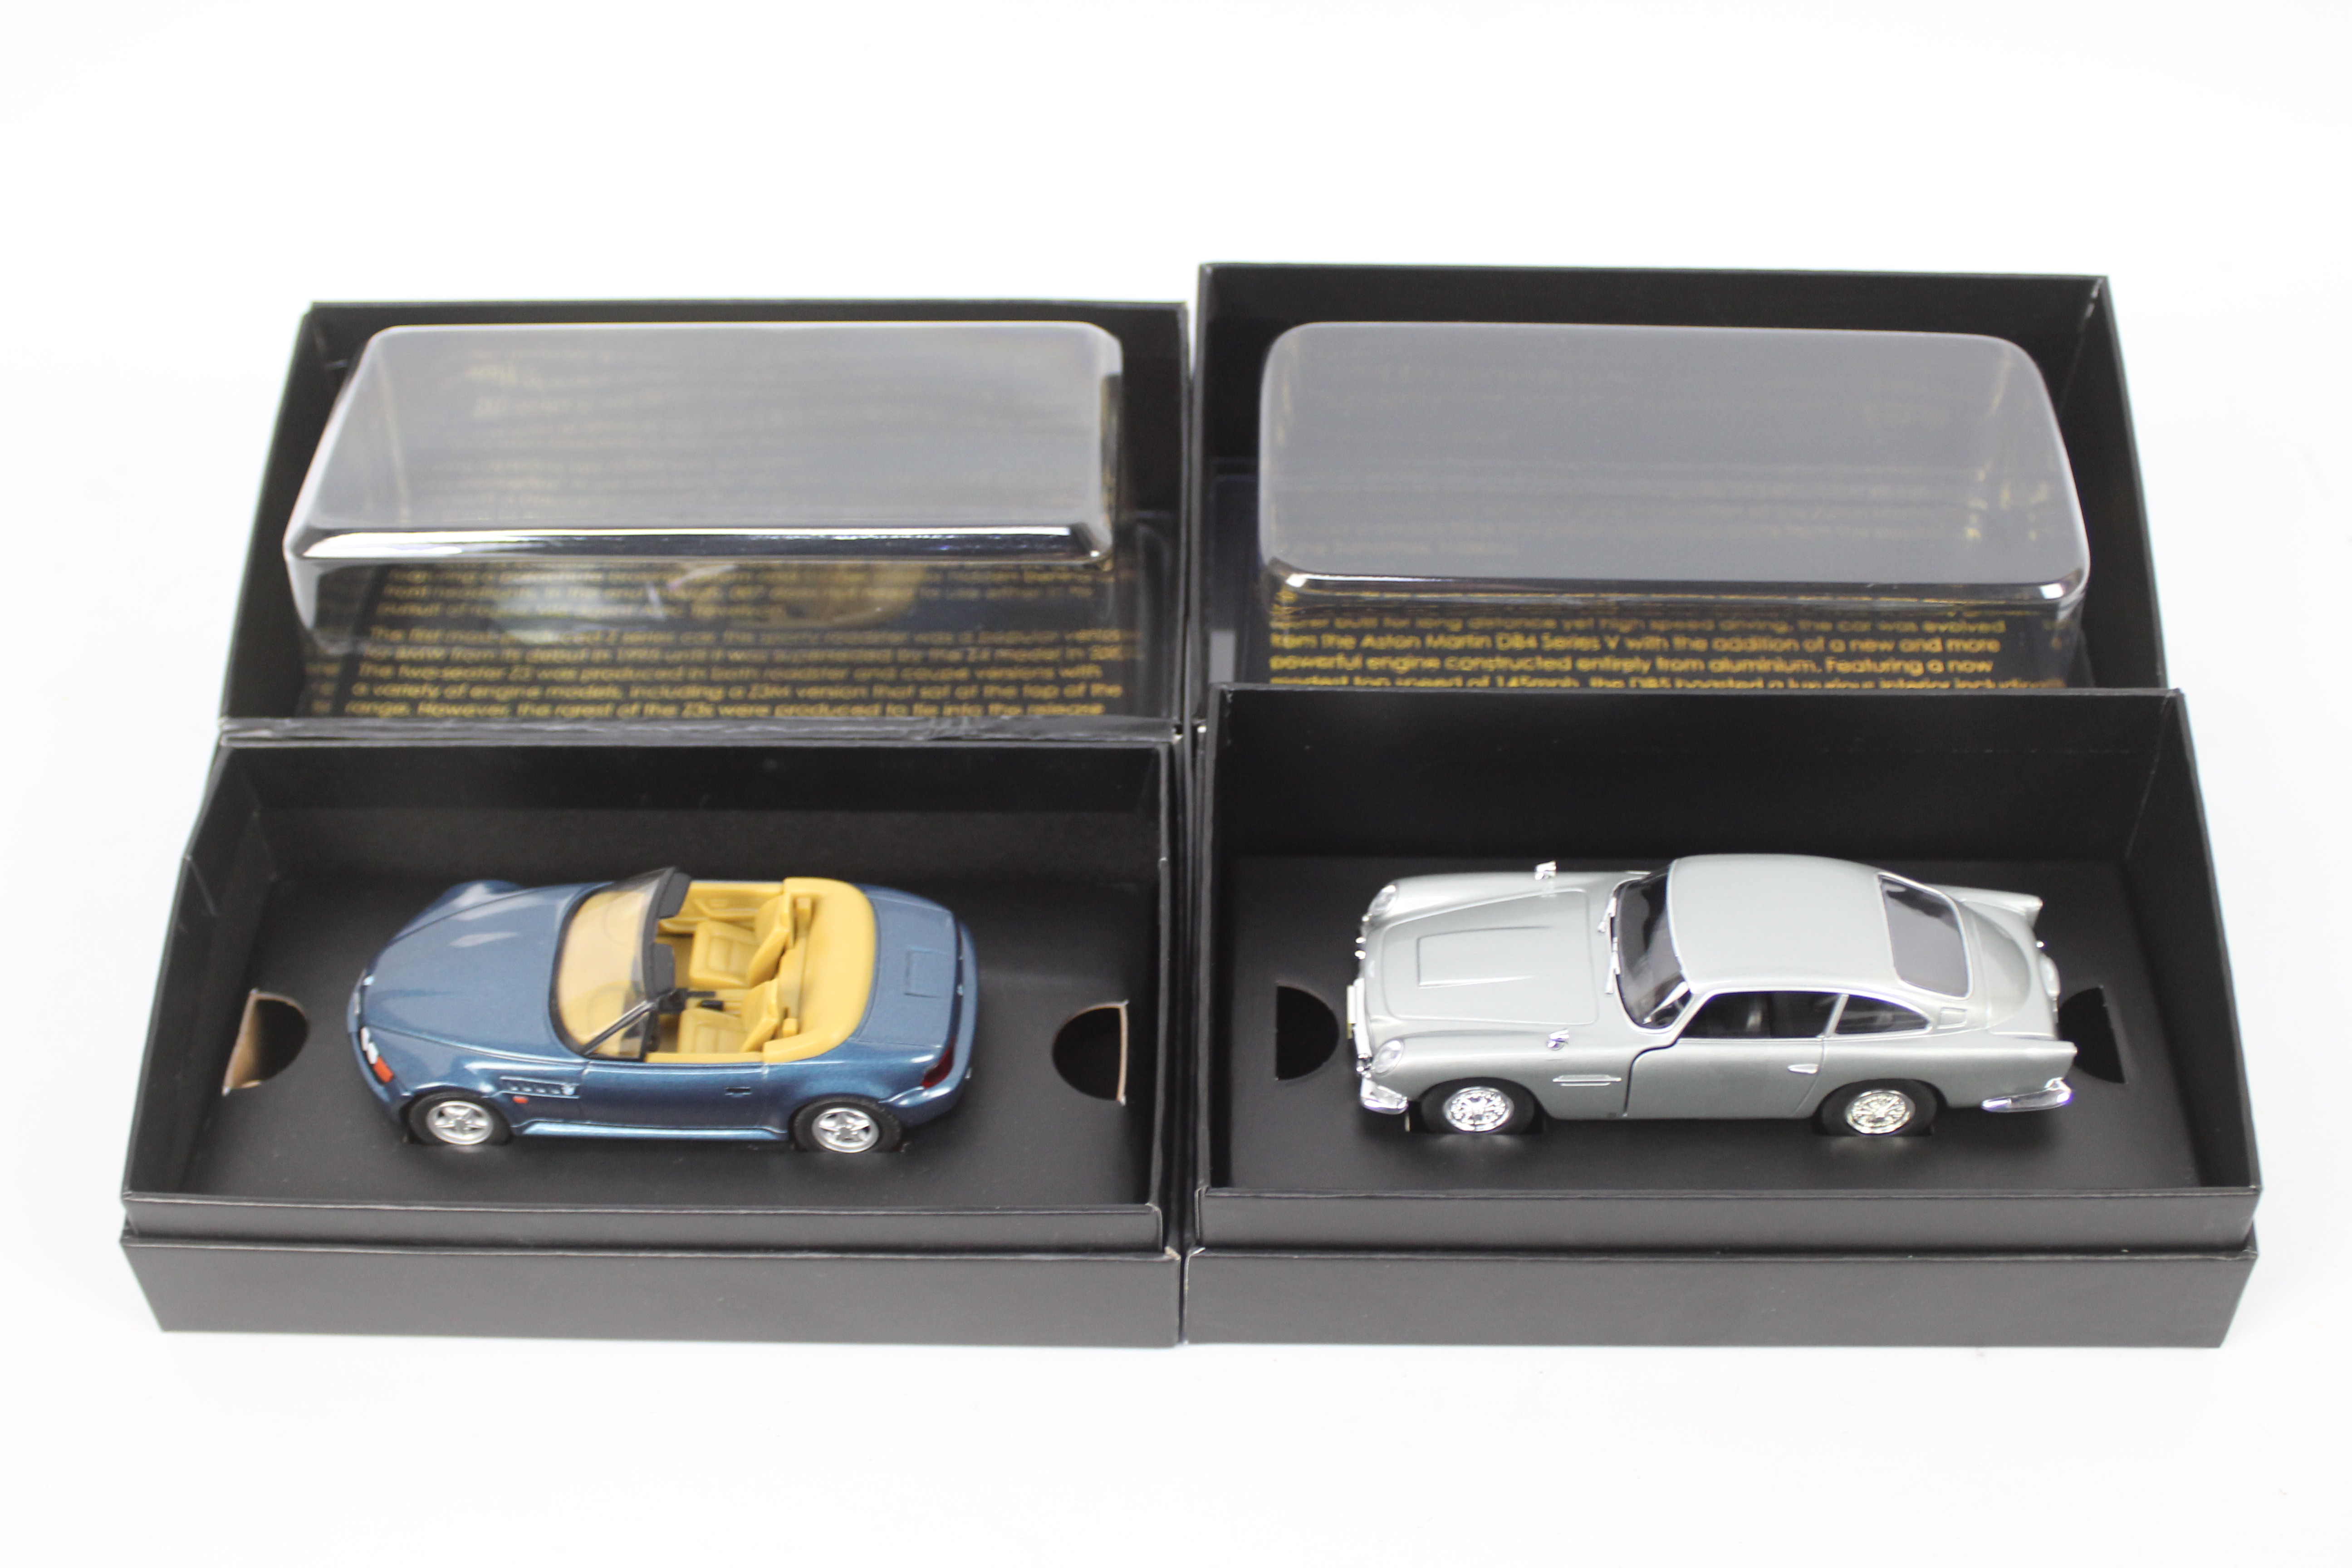 Corgi - Two boxed 1:43 scale 'James Bond' themed diecast model vehicles.